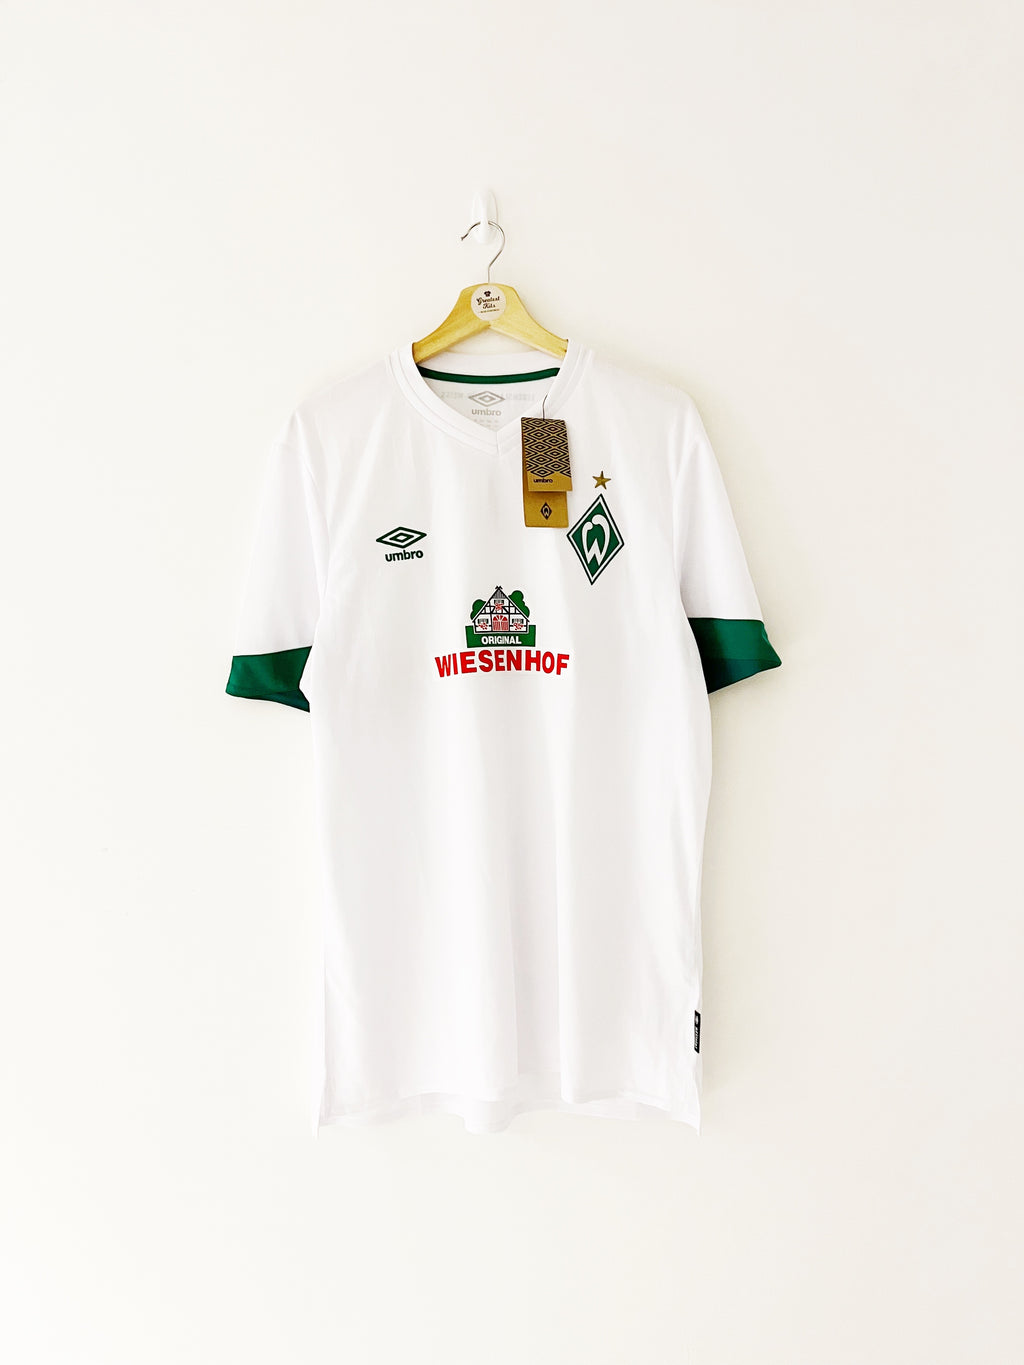 2021/22 Werder Bremen Away Shirt (XL) BNWT